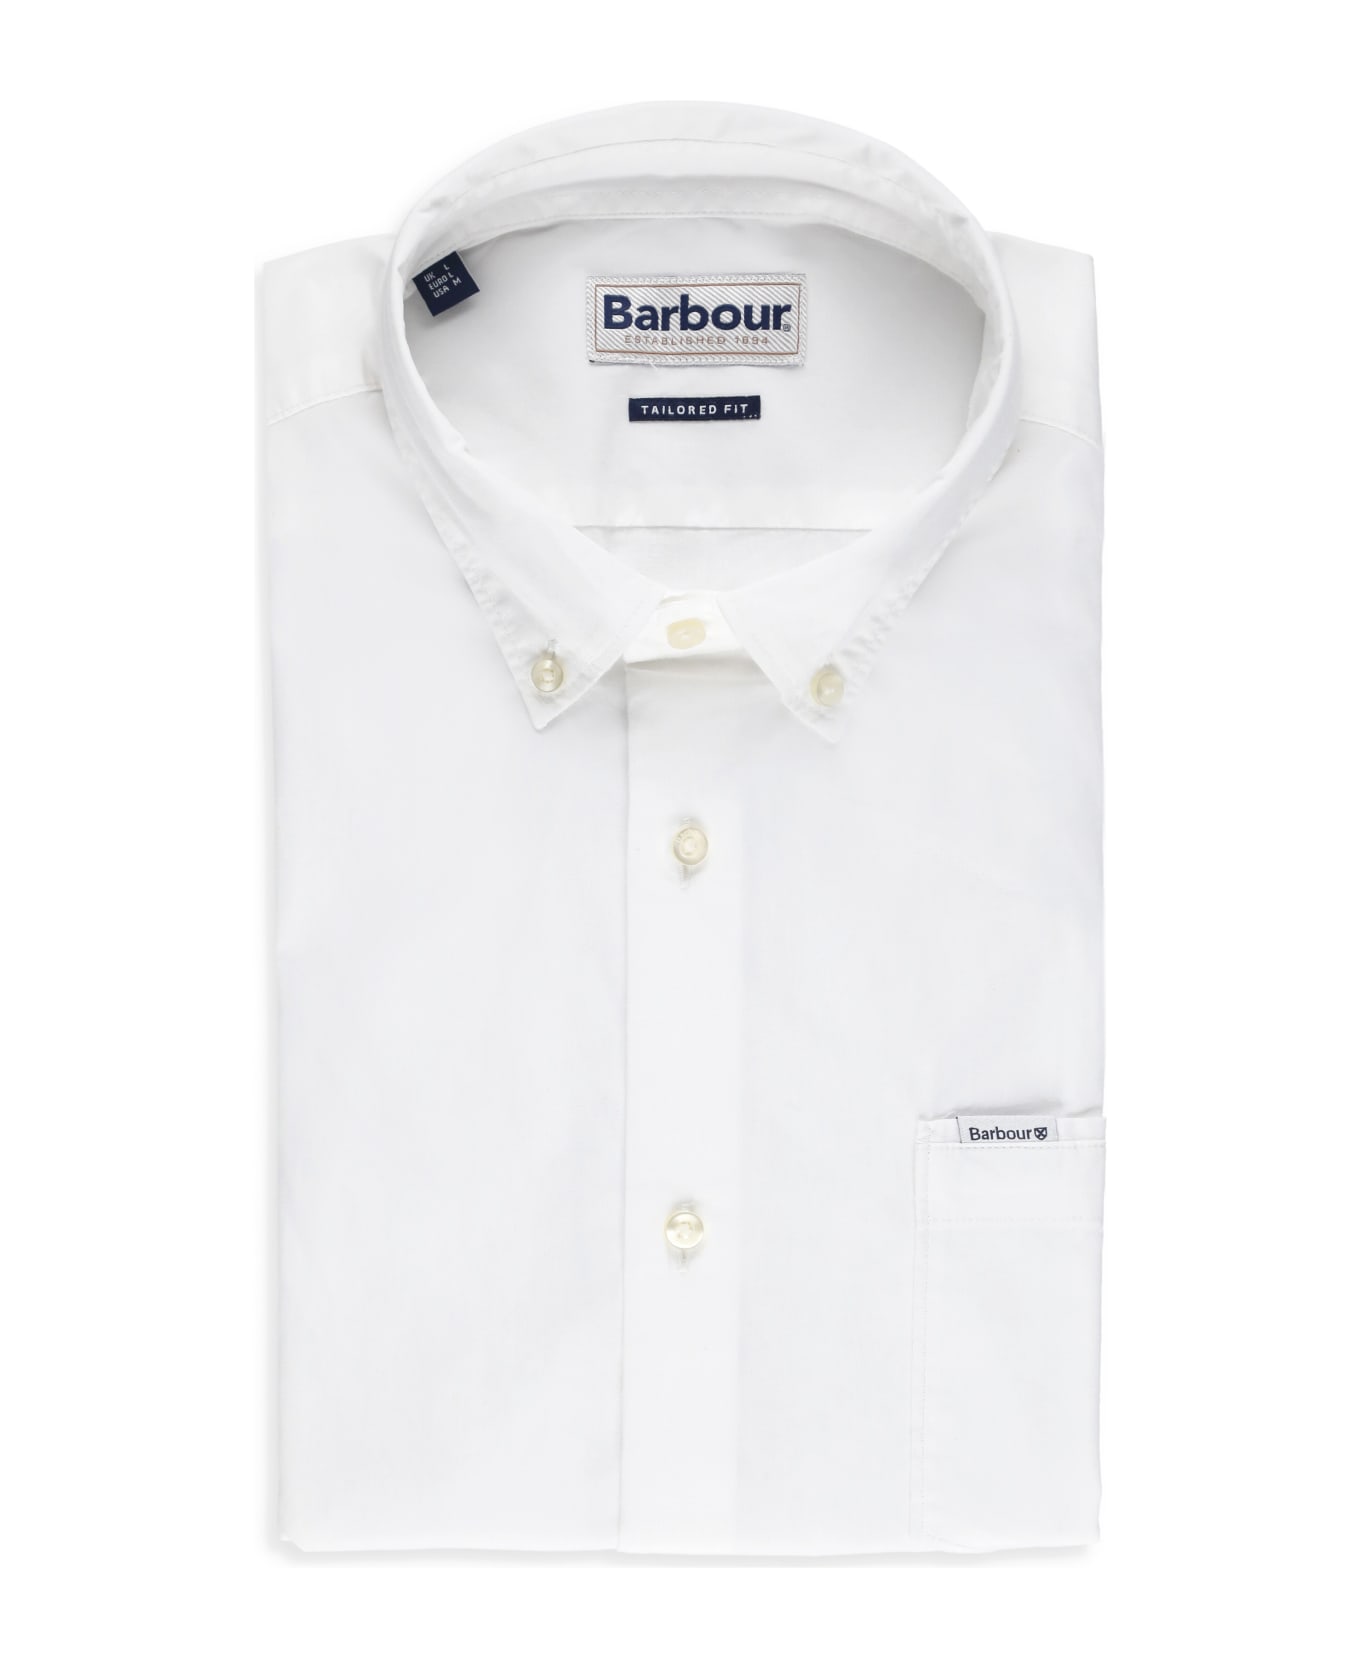 Barbour Logoed Shirt - White シャツ